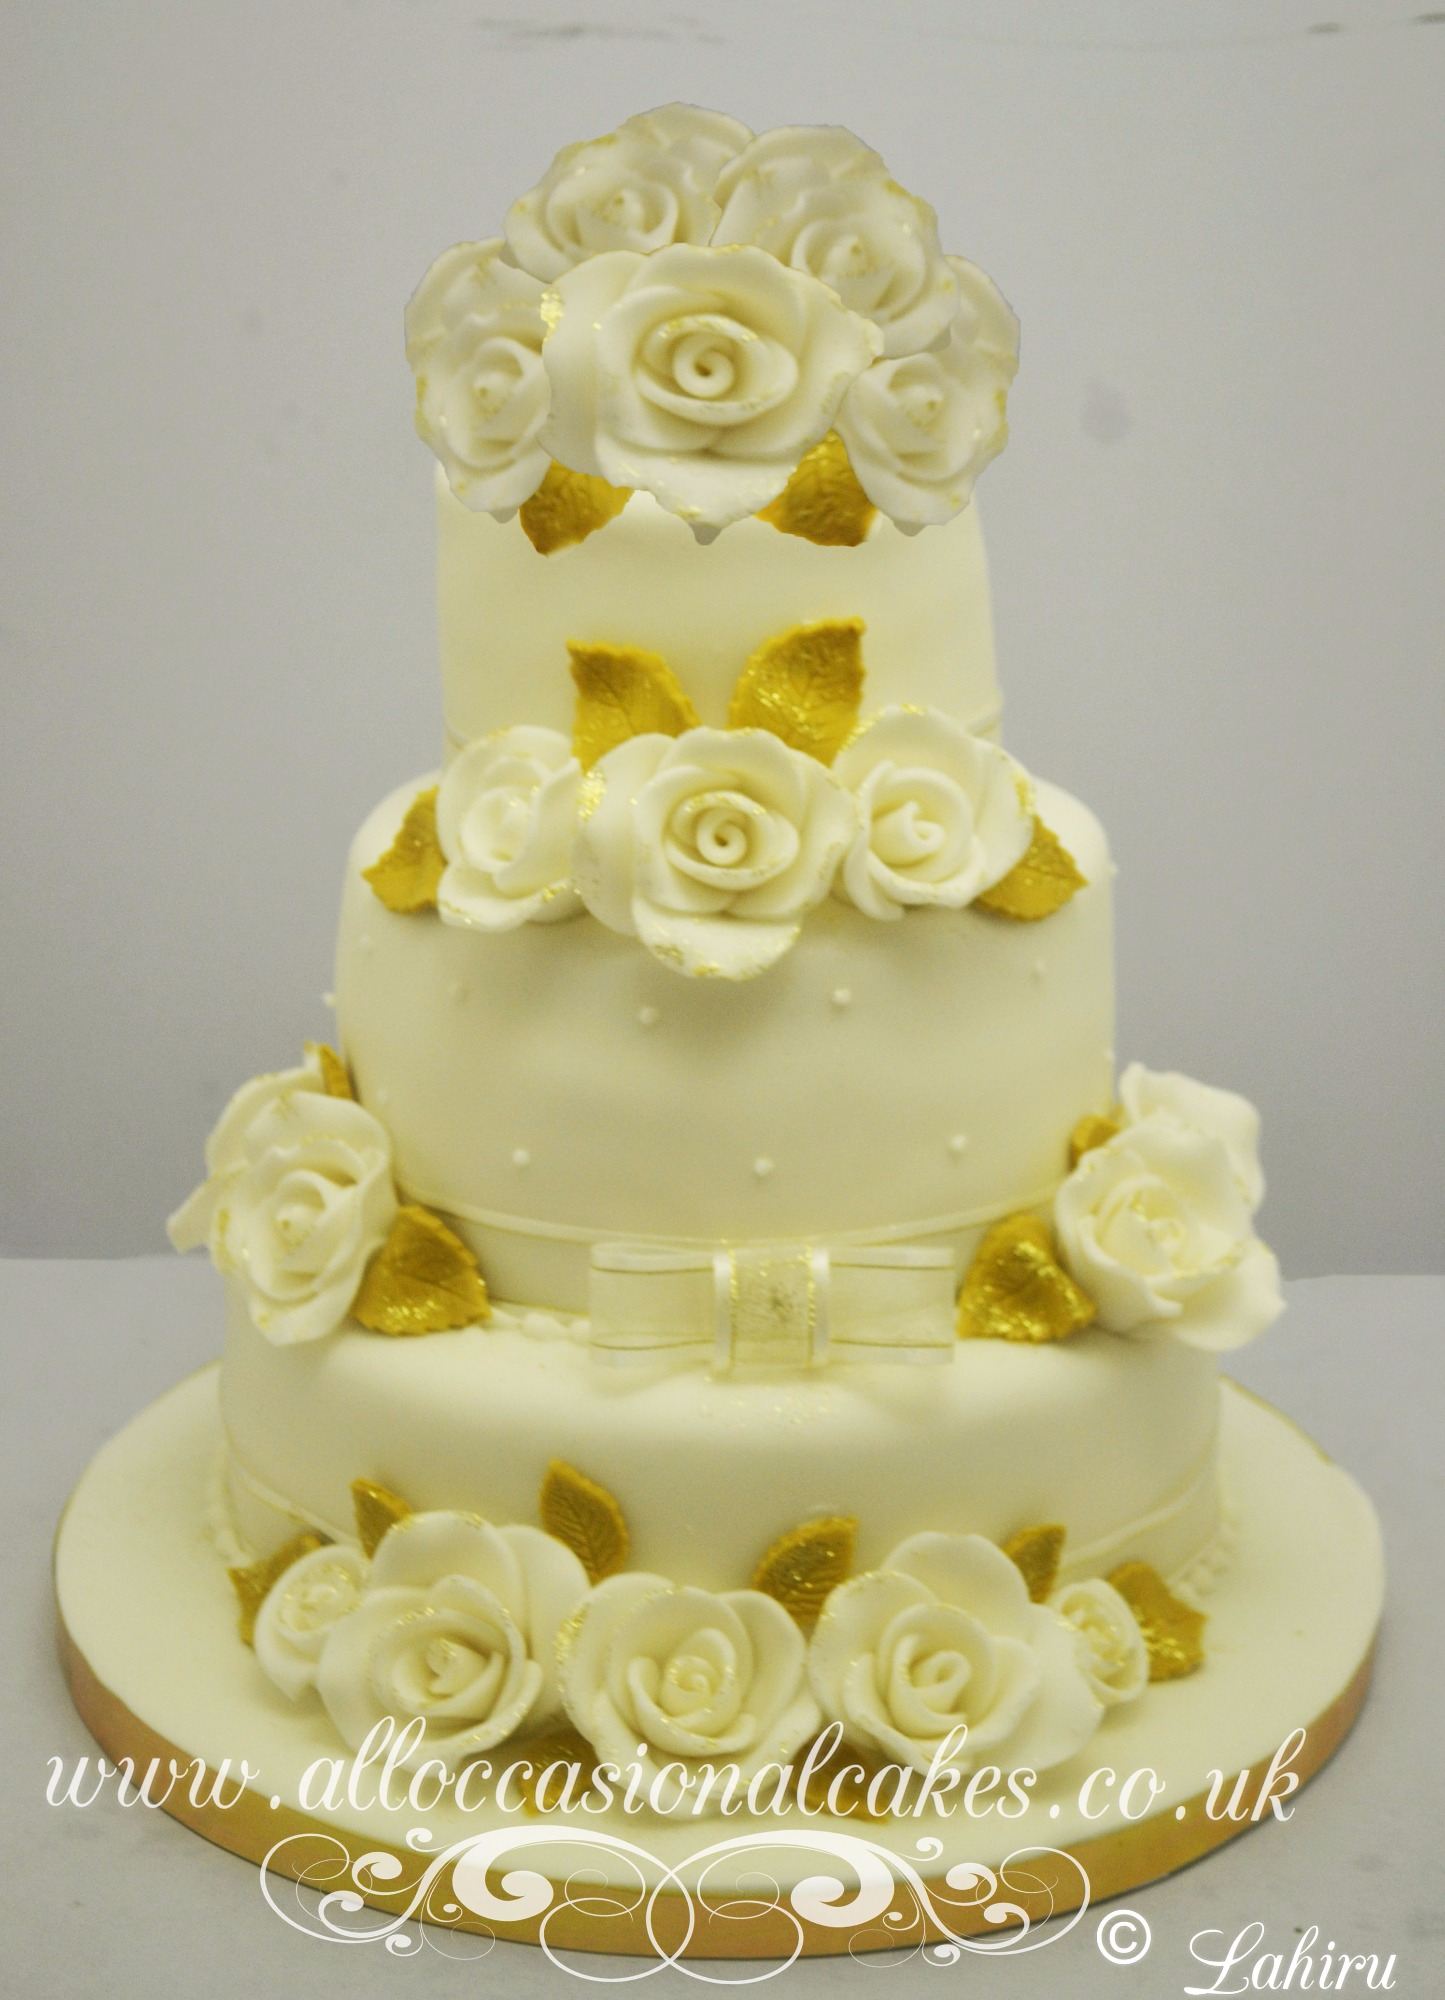 golden wedding anniversary cakes